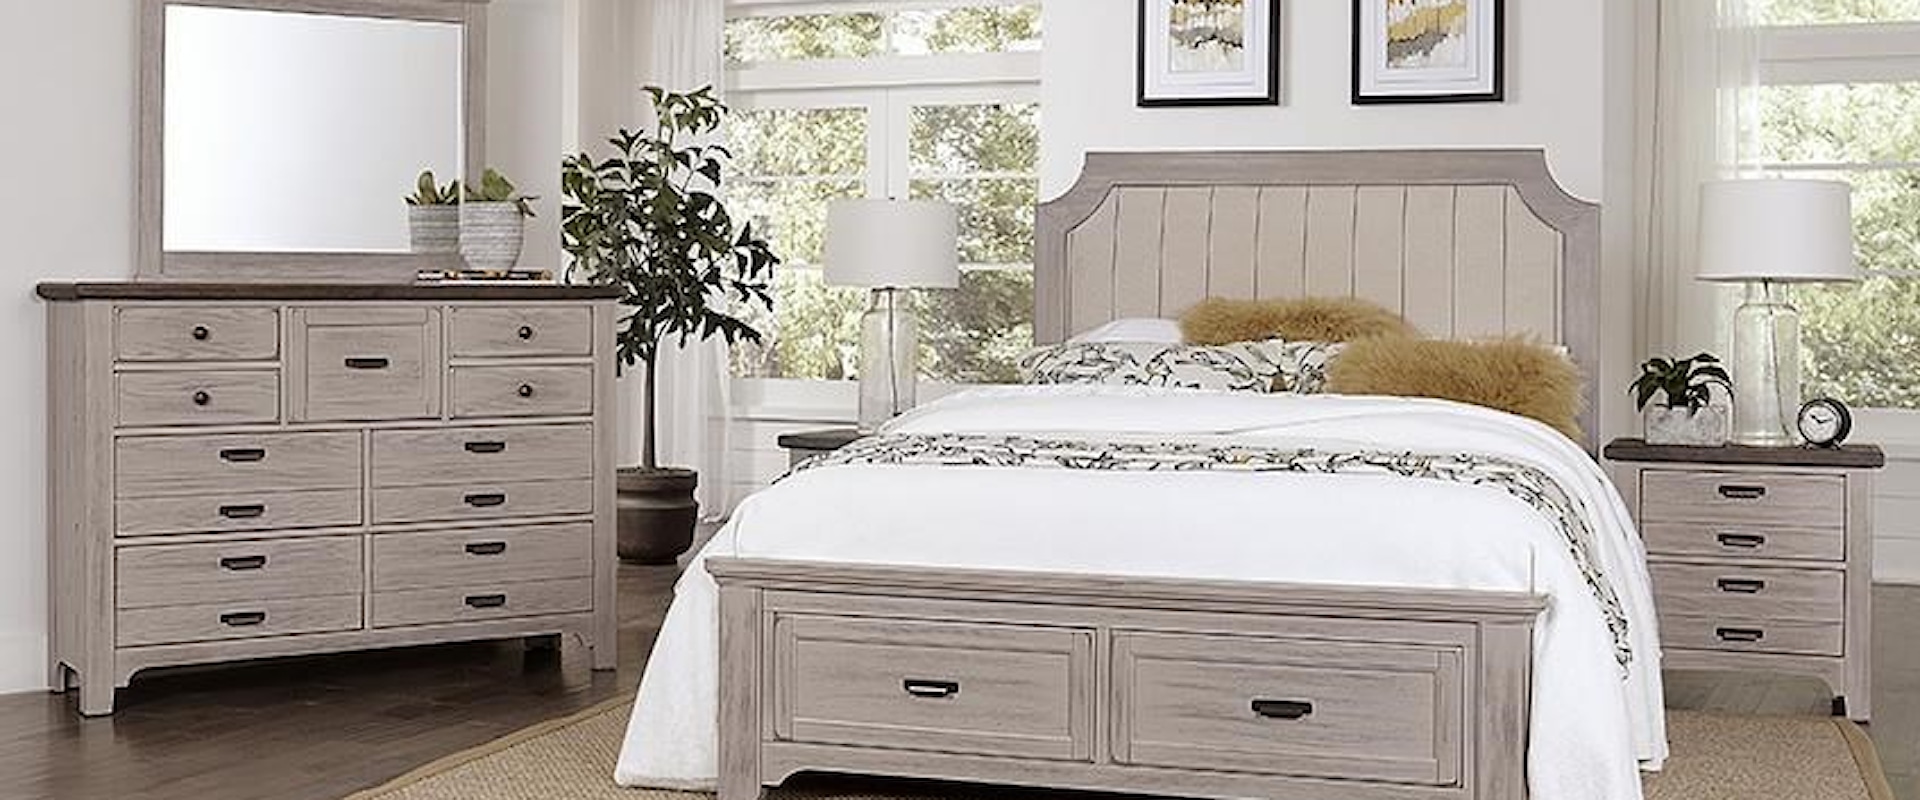 Queen Upholstered Storage Bed, 9 Drawer Dresser, Master Landscape Mirror, 2 Drawer Nightstand